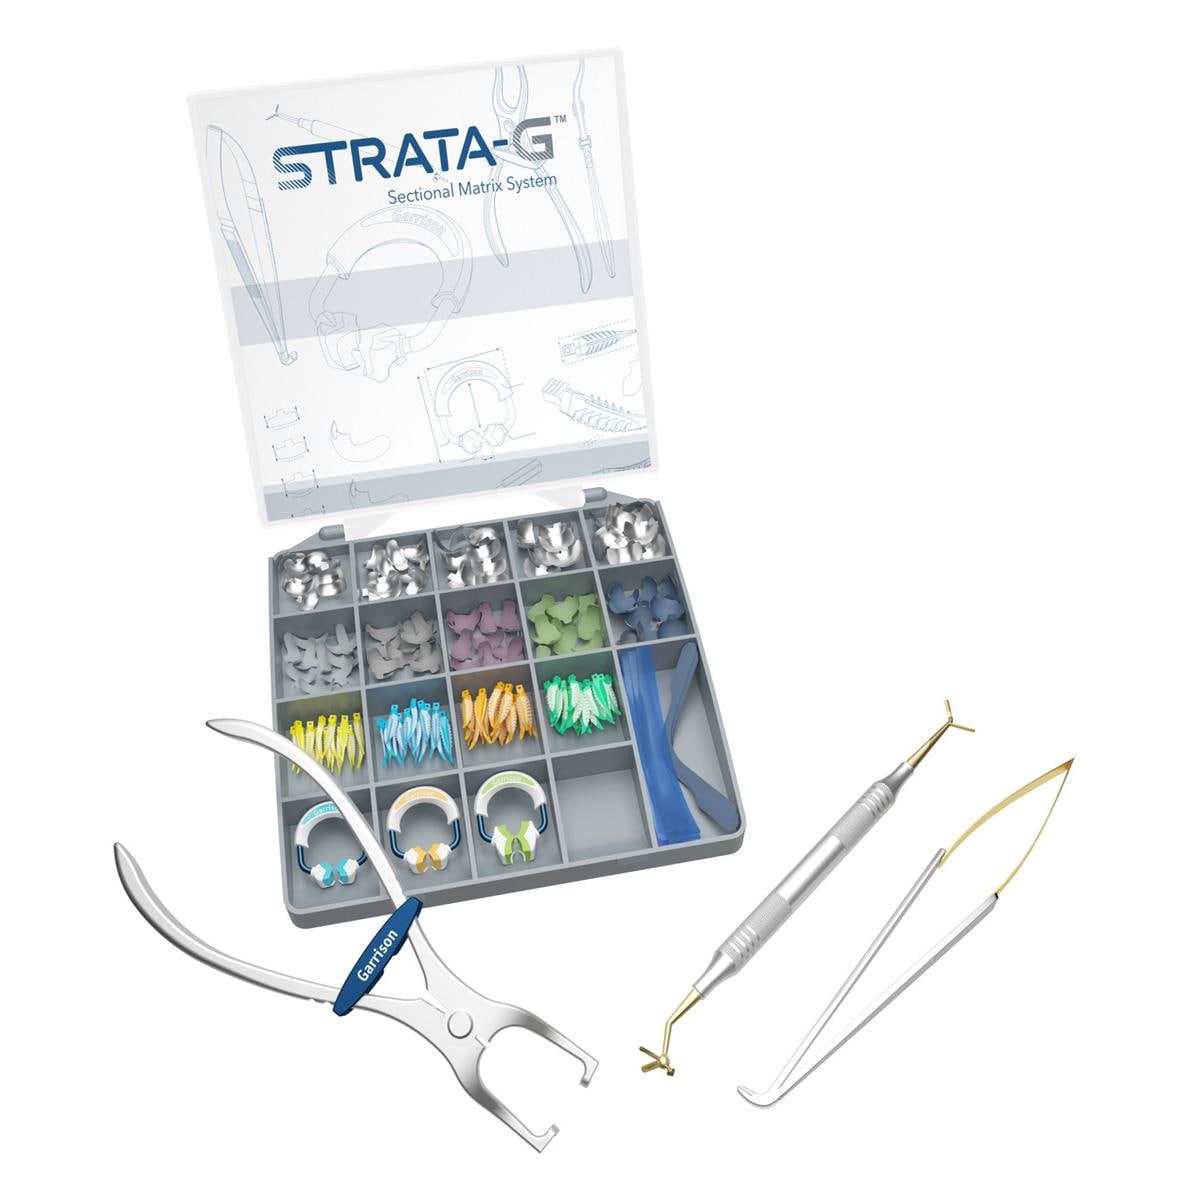 Strata-G sectional matrix system - Professional Kit (SG-KSH-11)